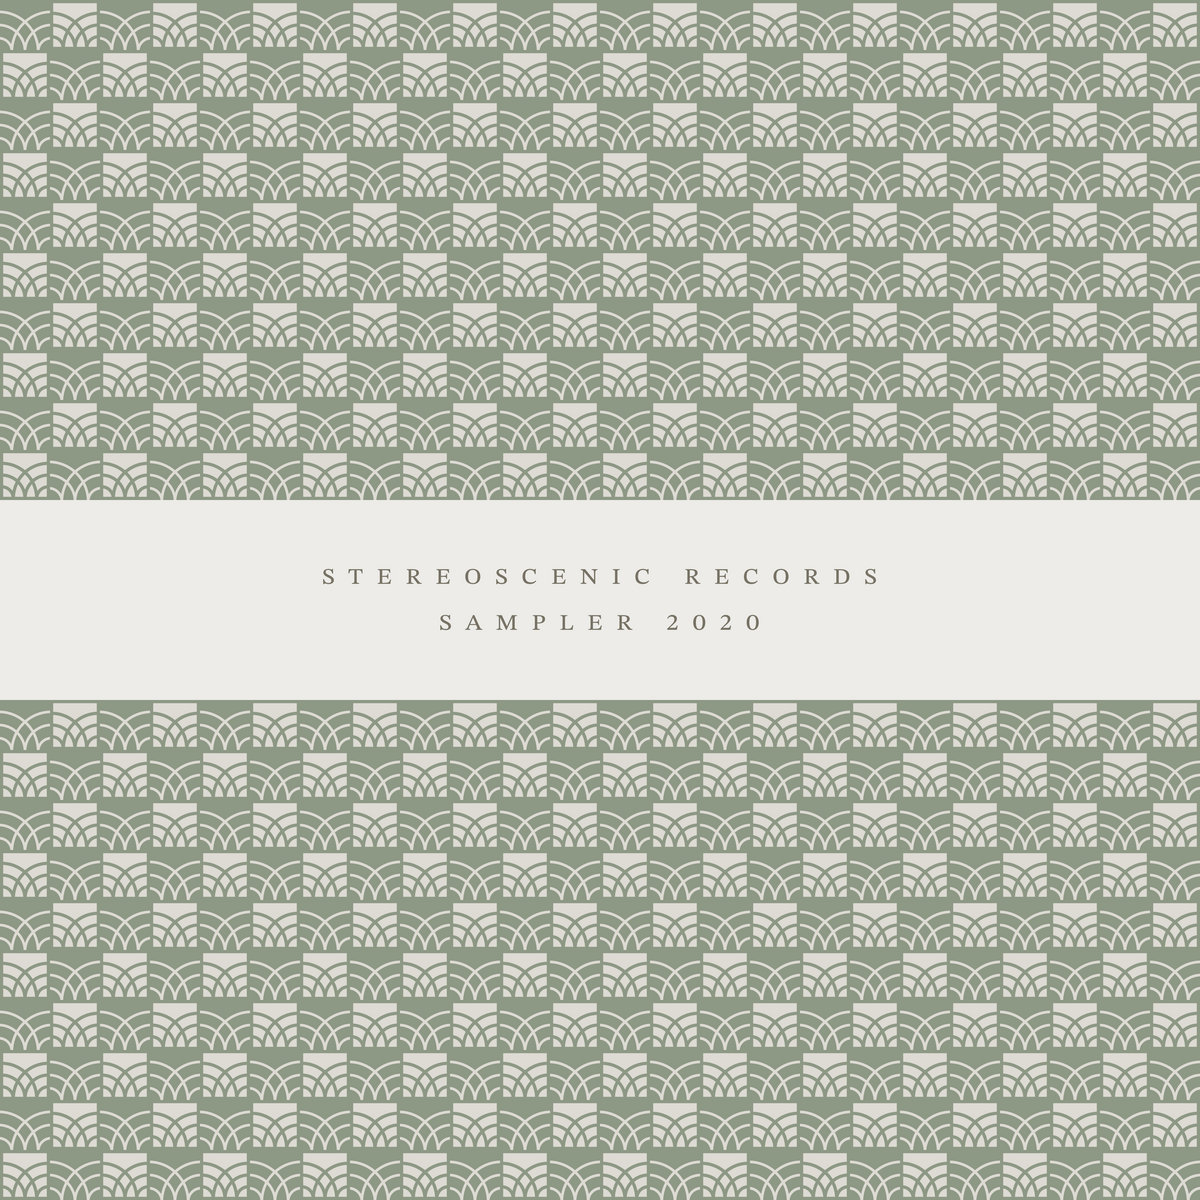 [album cover art] Stereoscenic Records Sampler 2020 (VA)